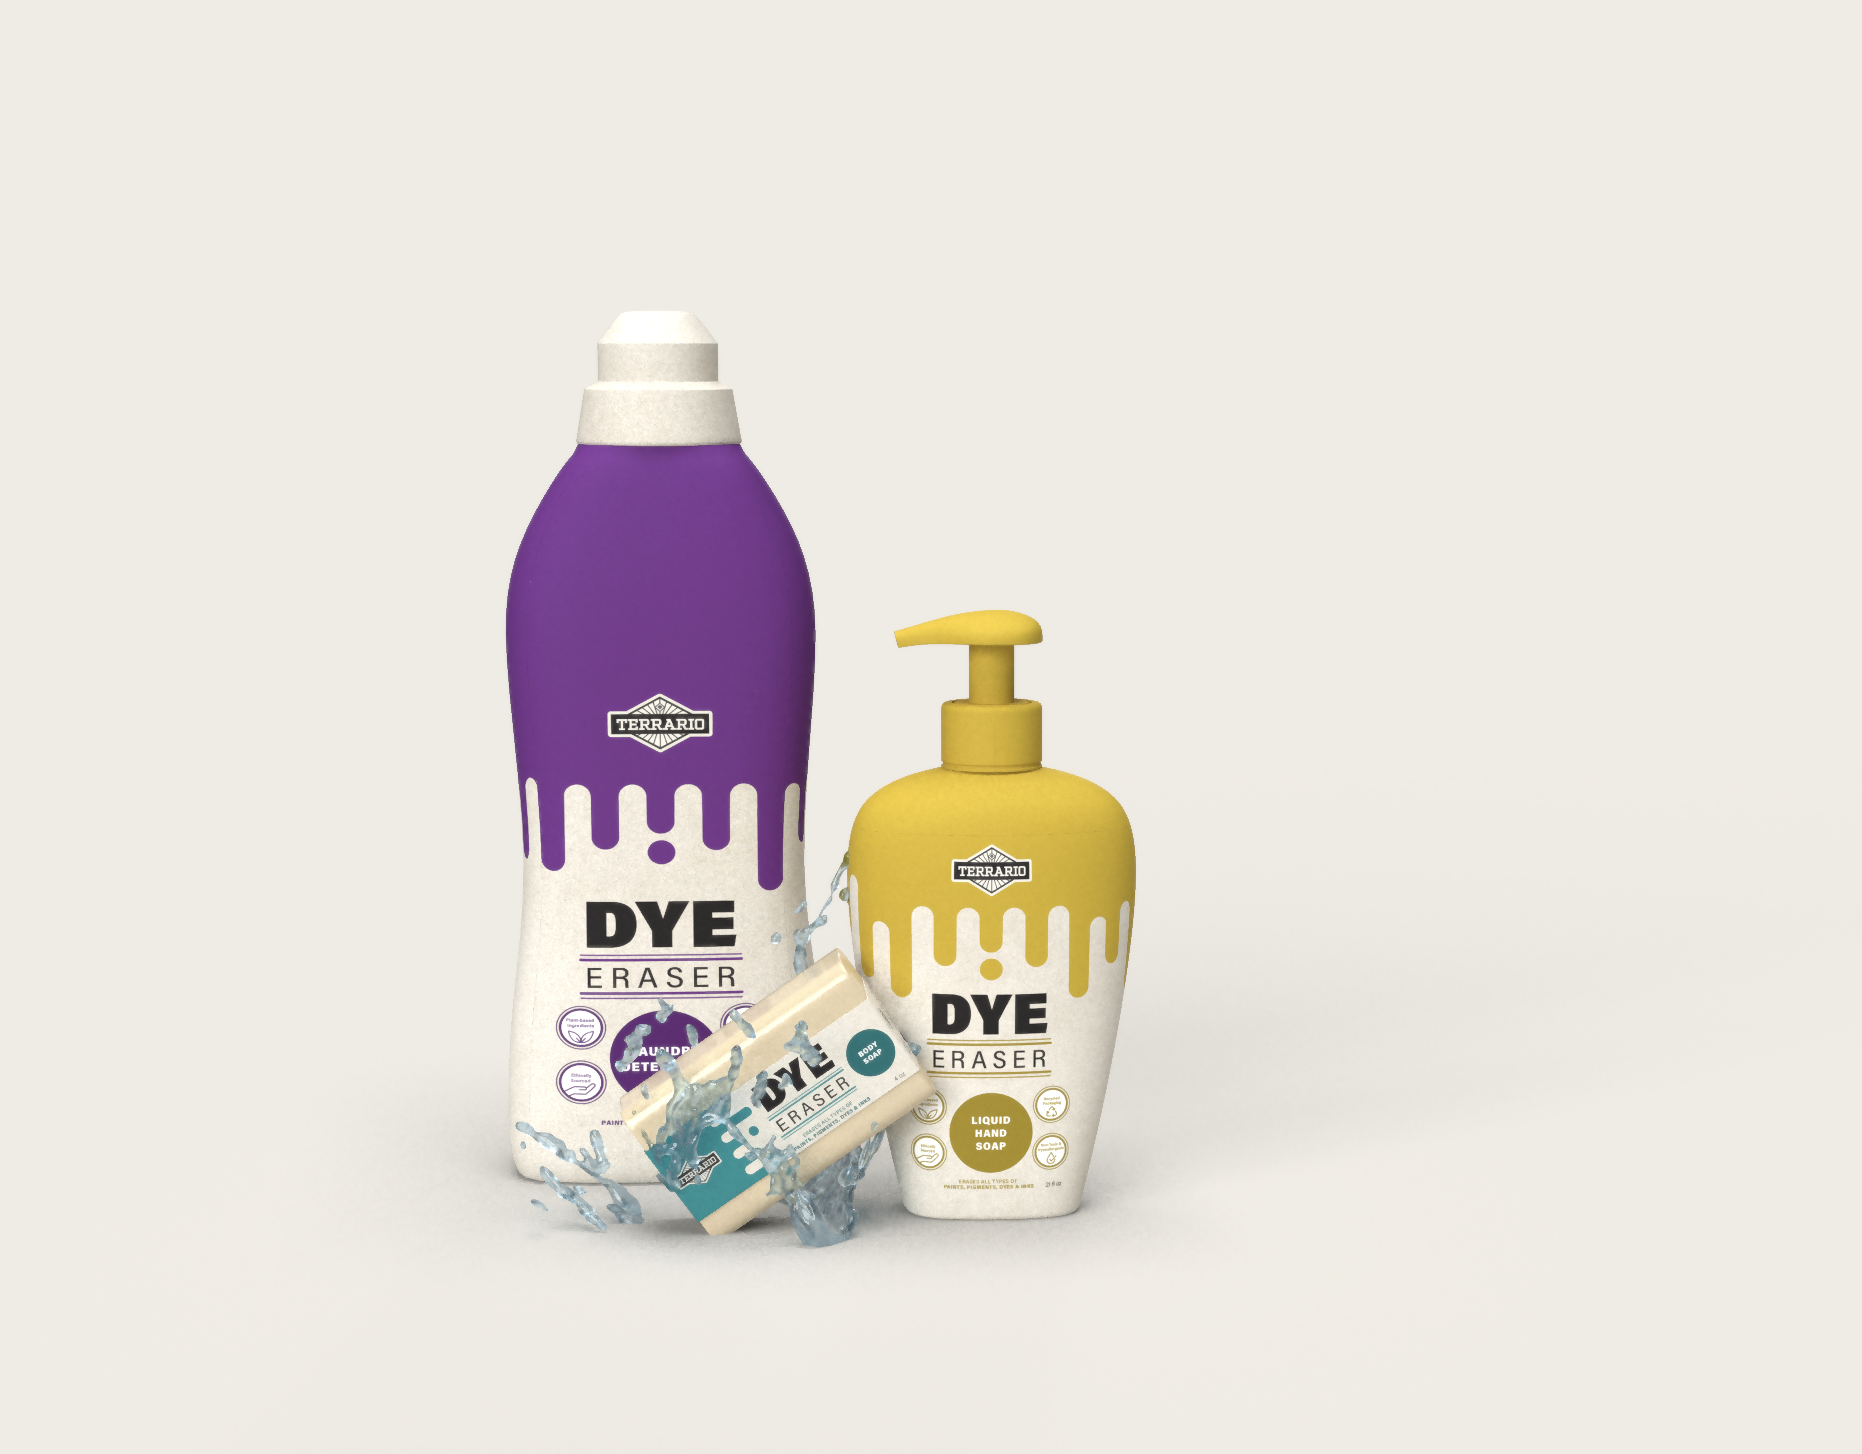 Vega Awards - Dye Eraser Cleaning Line